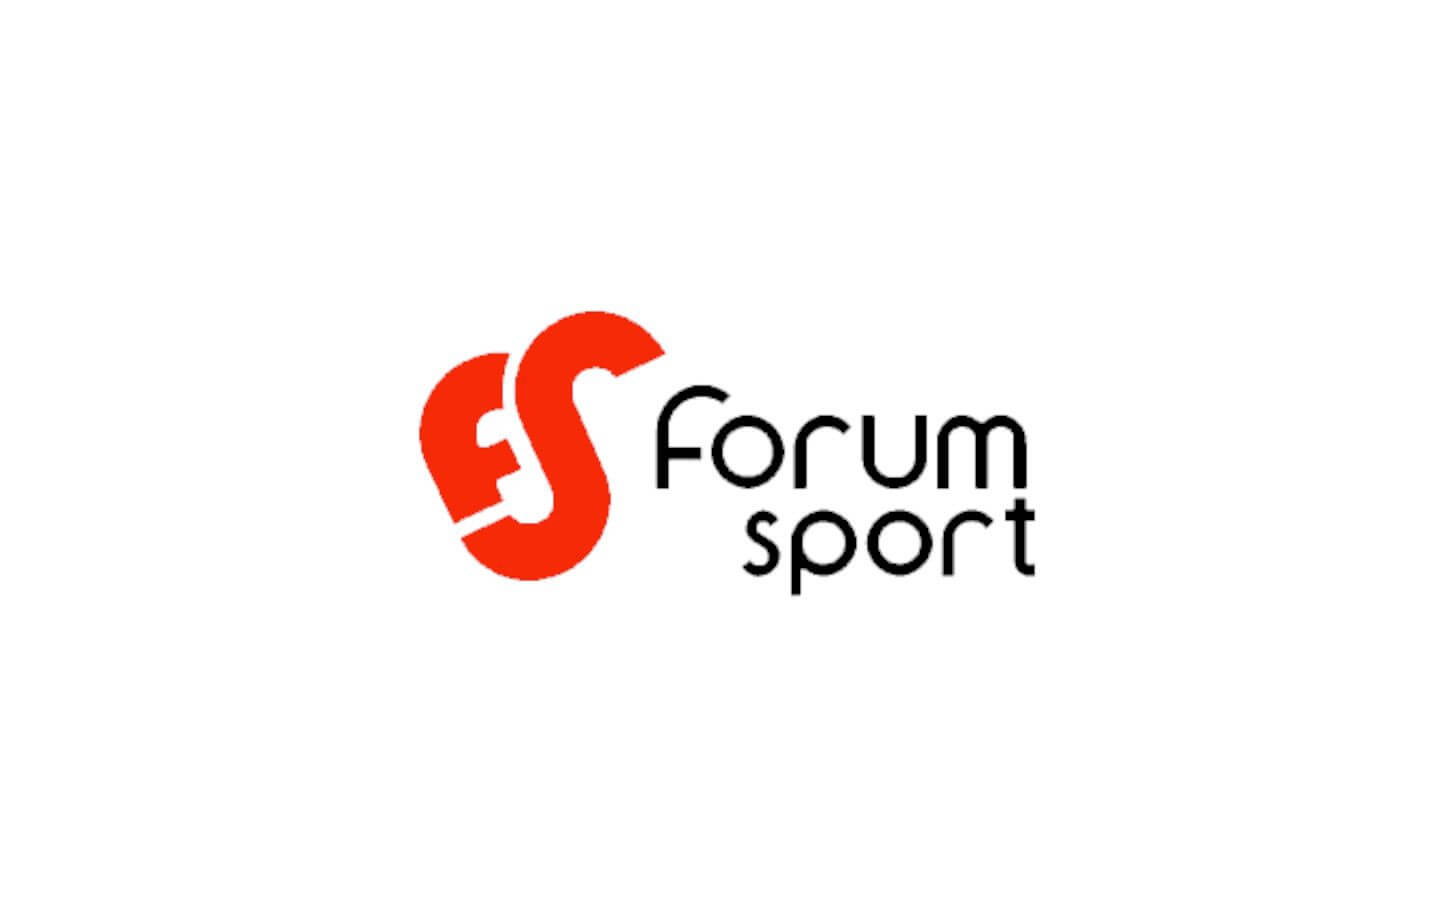 Forum ens. Sport forum. Forum dgiggtal лого. Cassandracareo. Cassandracareo elizamoore.